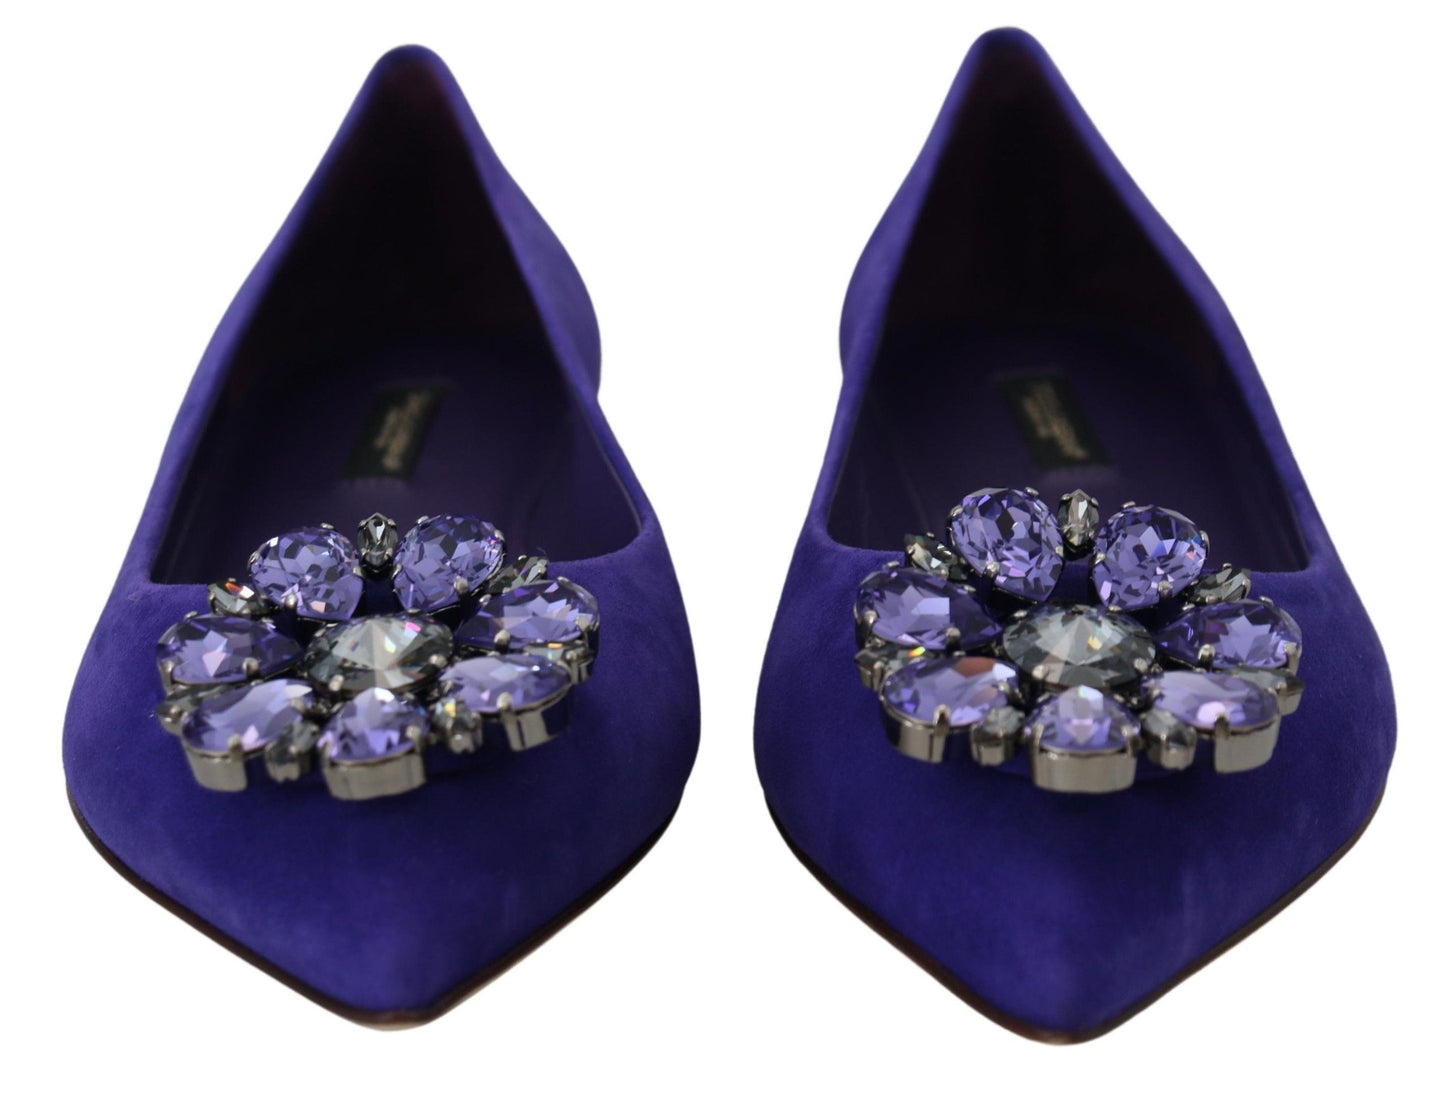 Embellished Crystal Purple Suede Flats